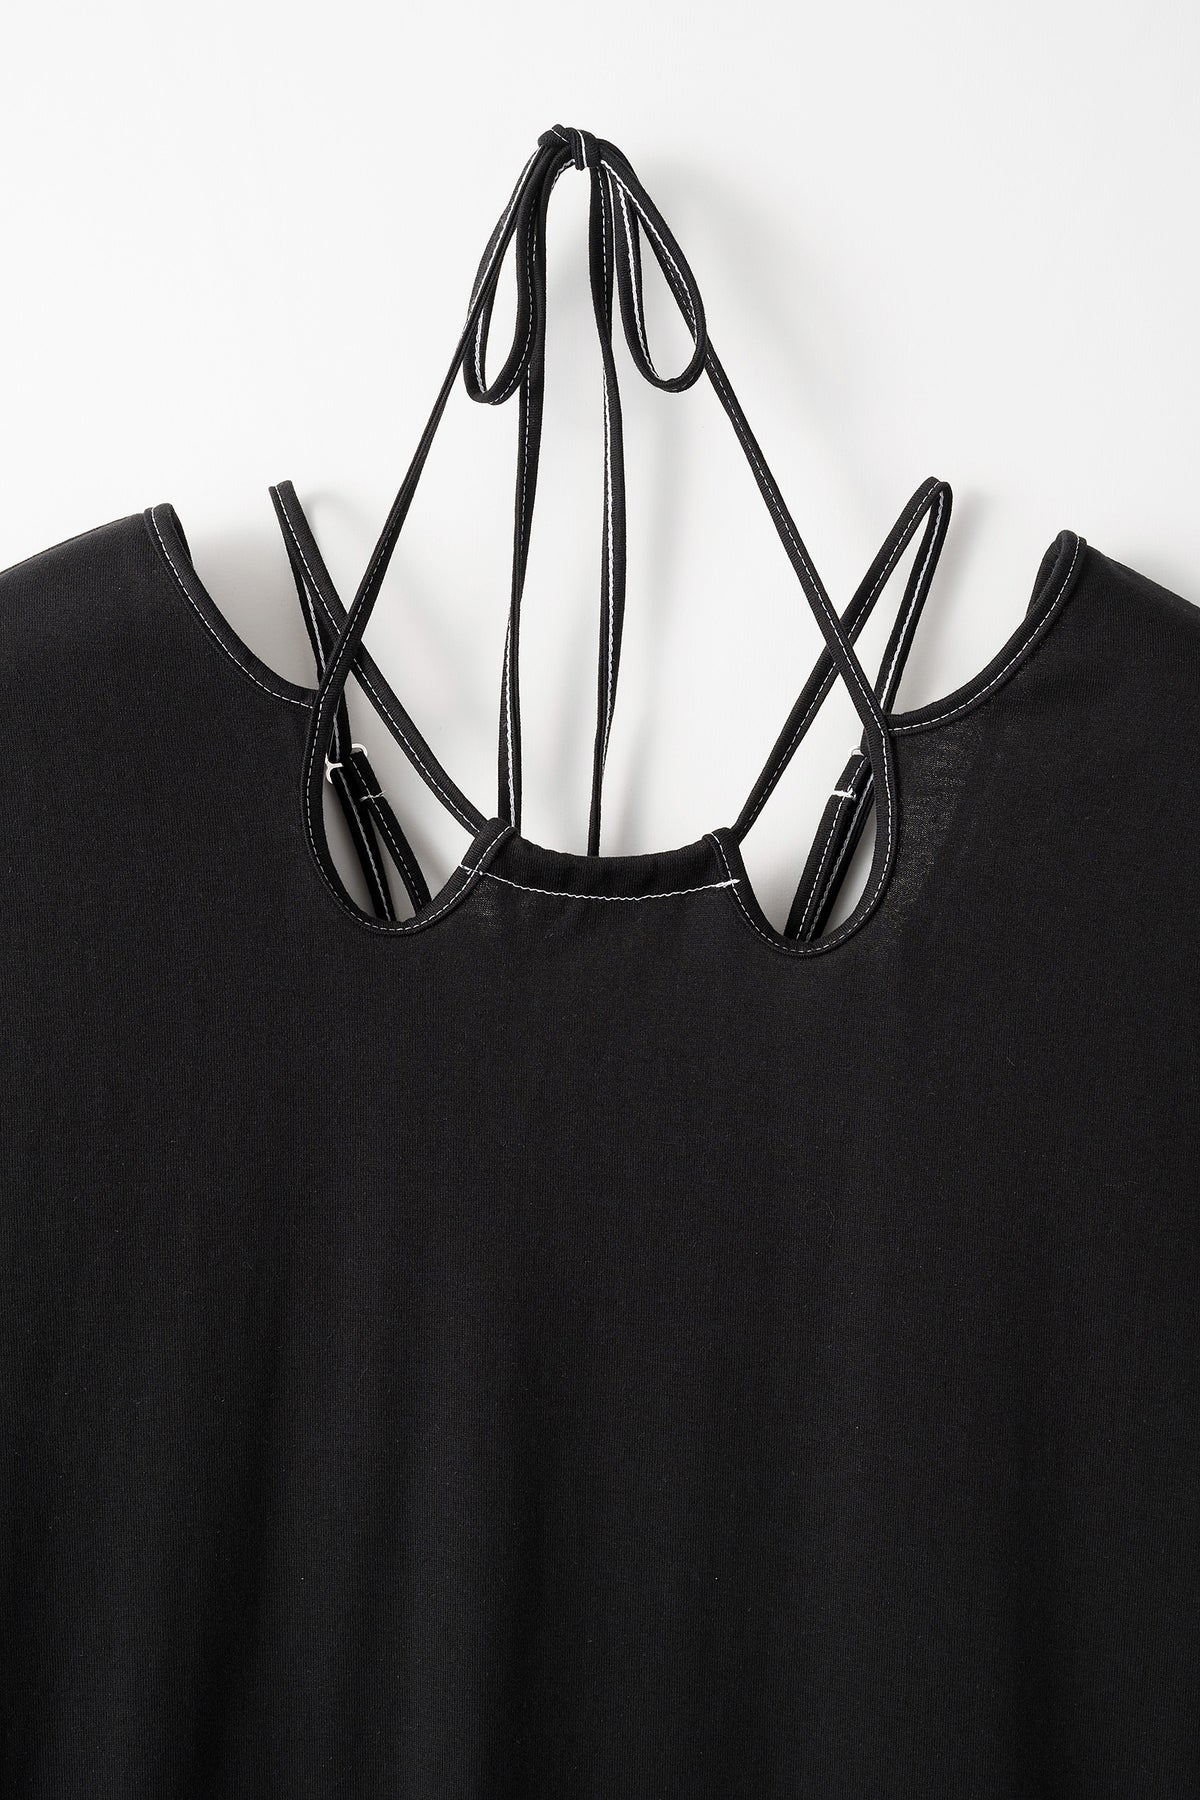 Ivy halfsleeve dress (Black)